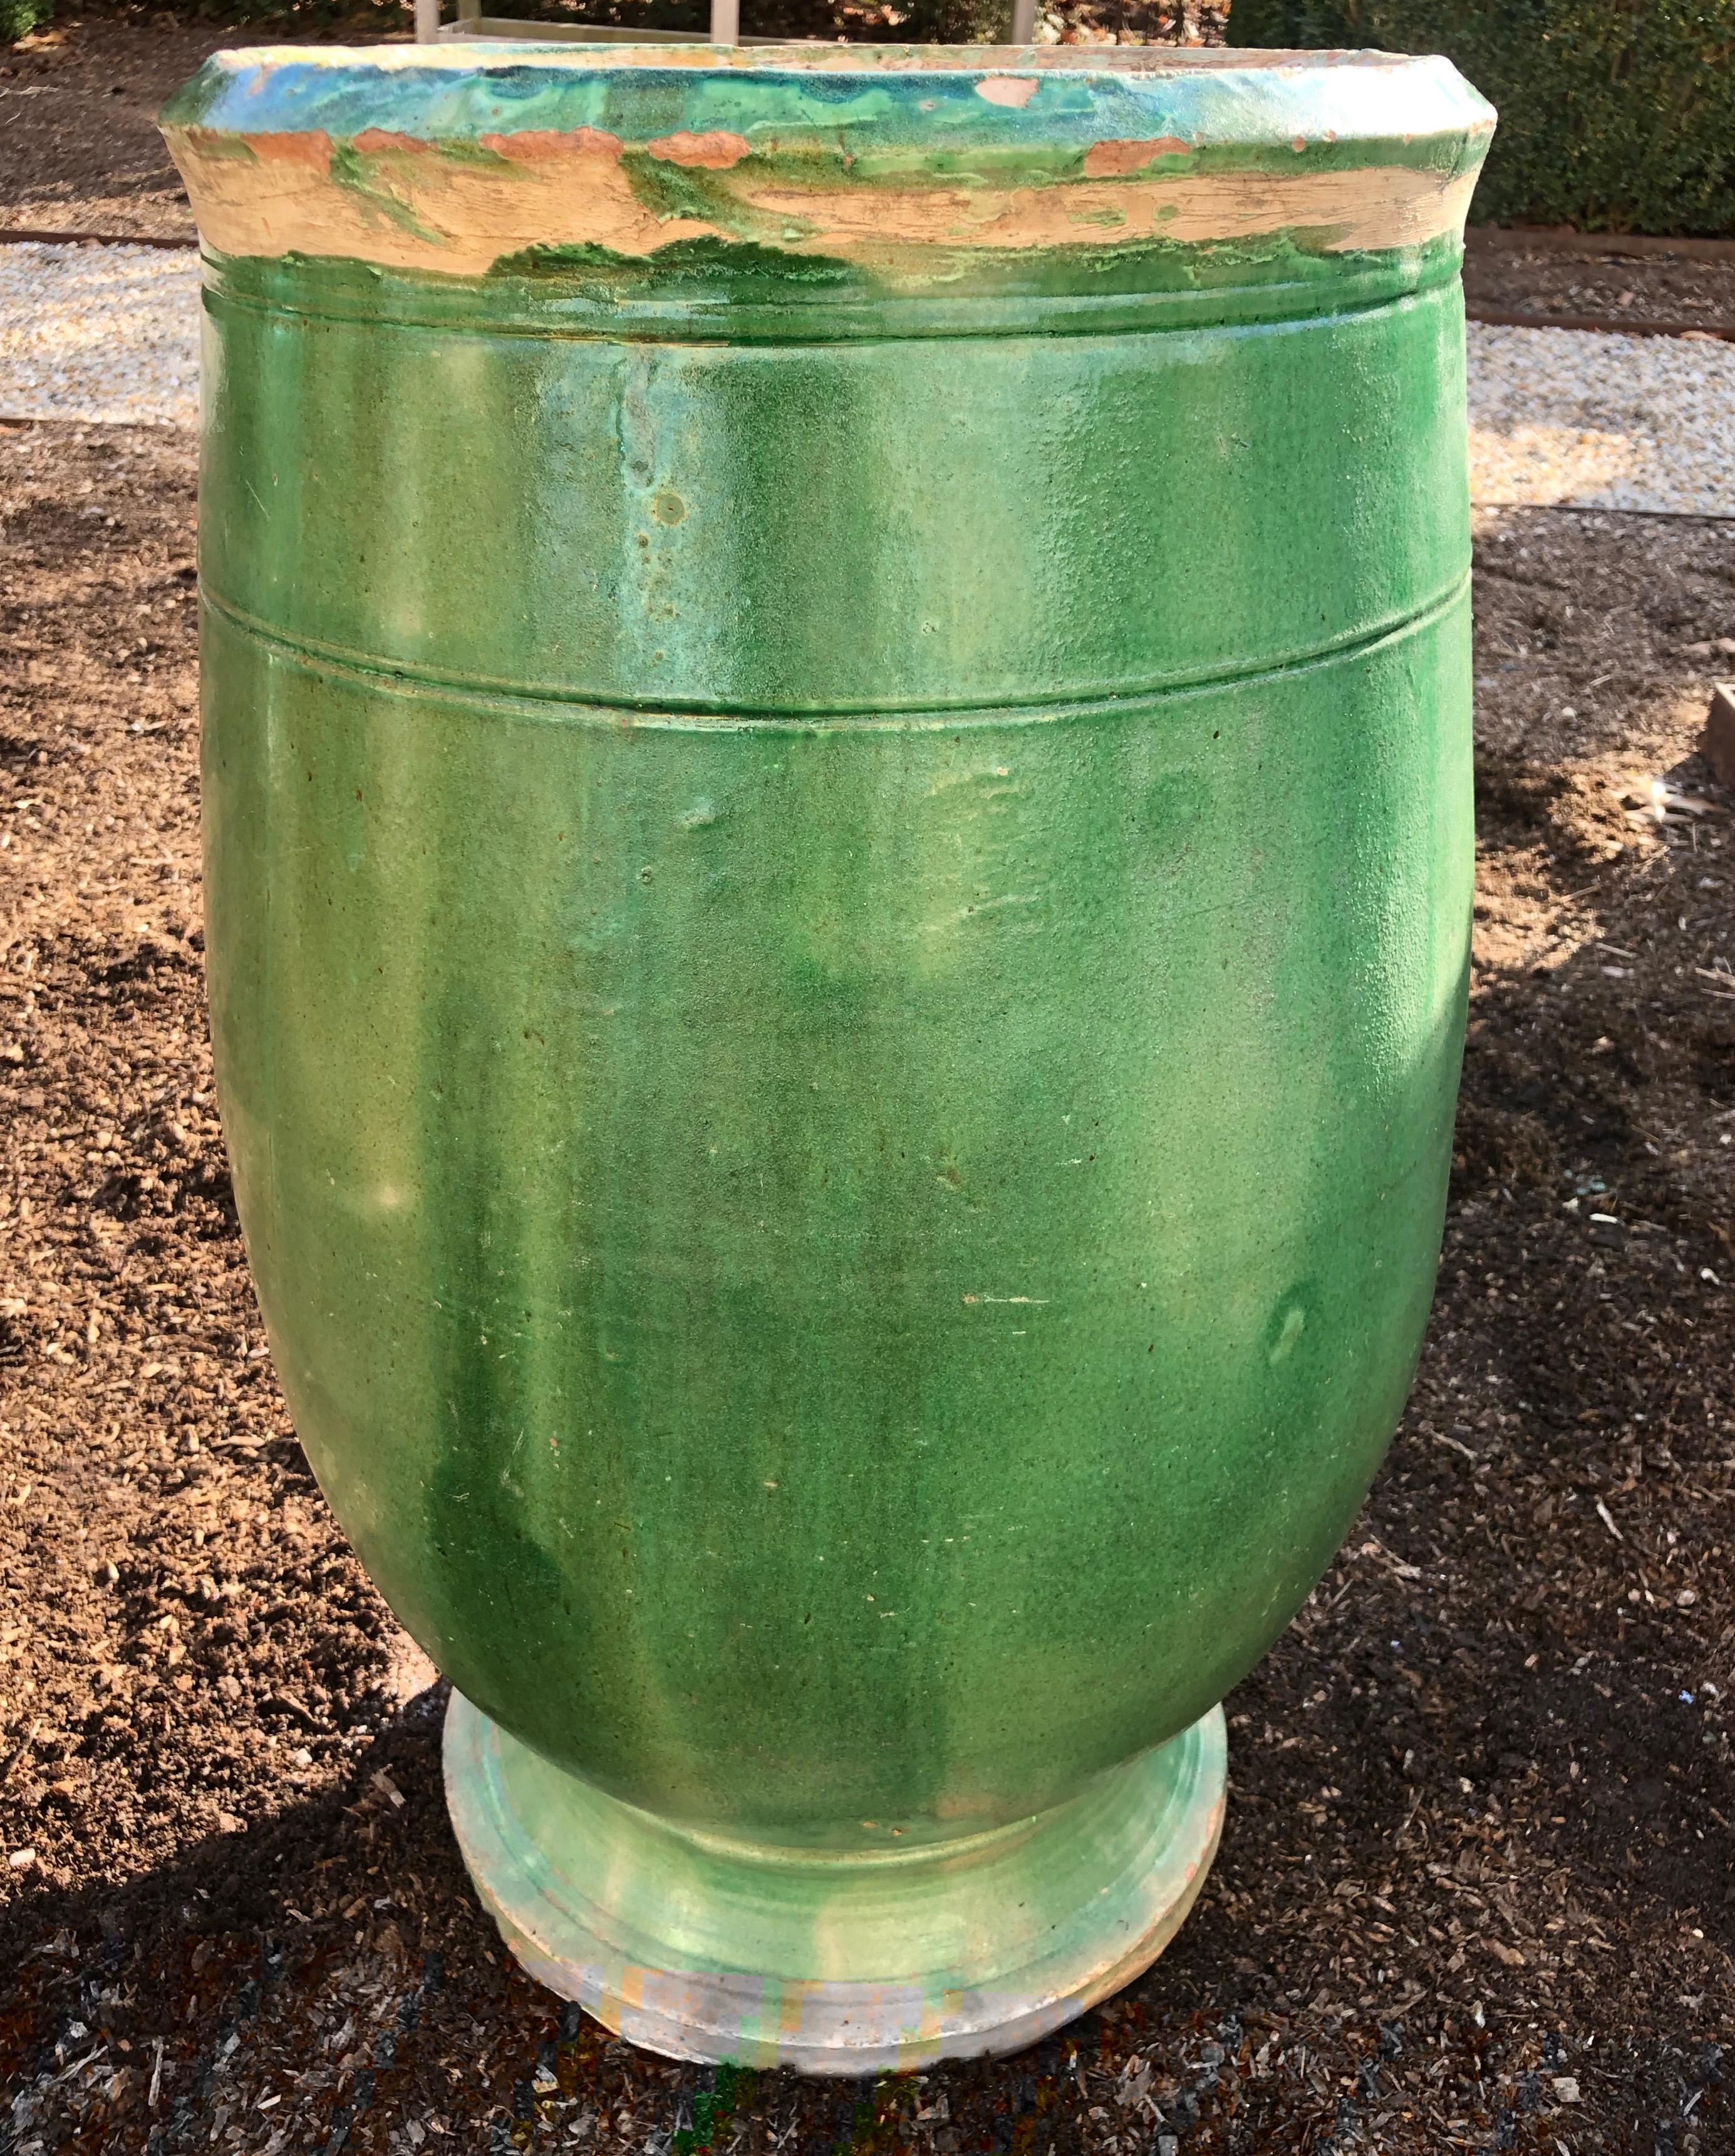 French 19th Century Green-Glazed Terracotta Pot from Apt 1